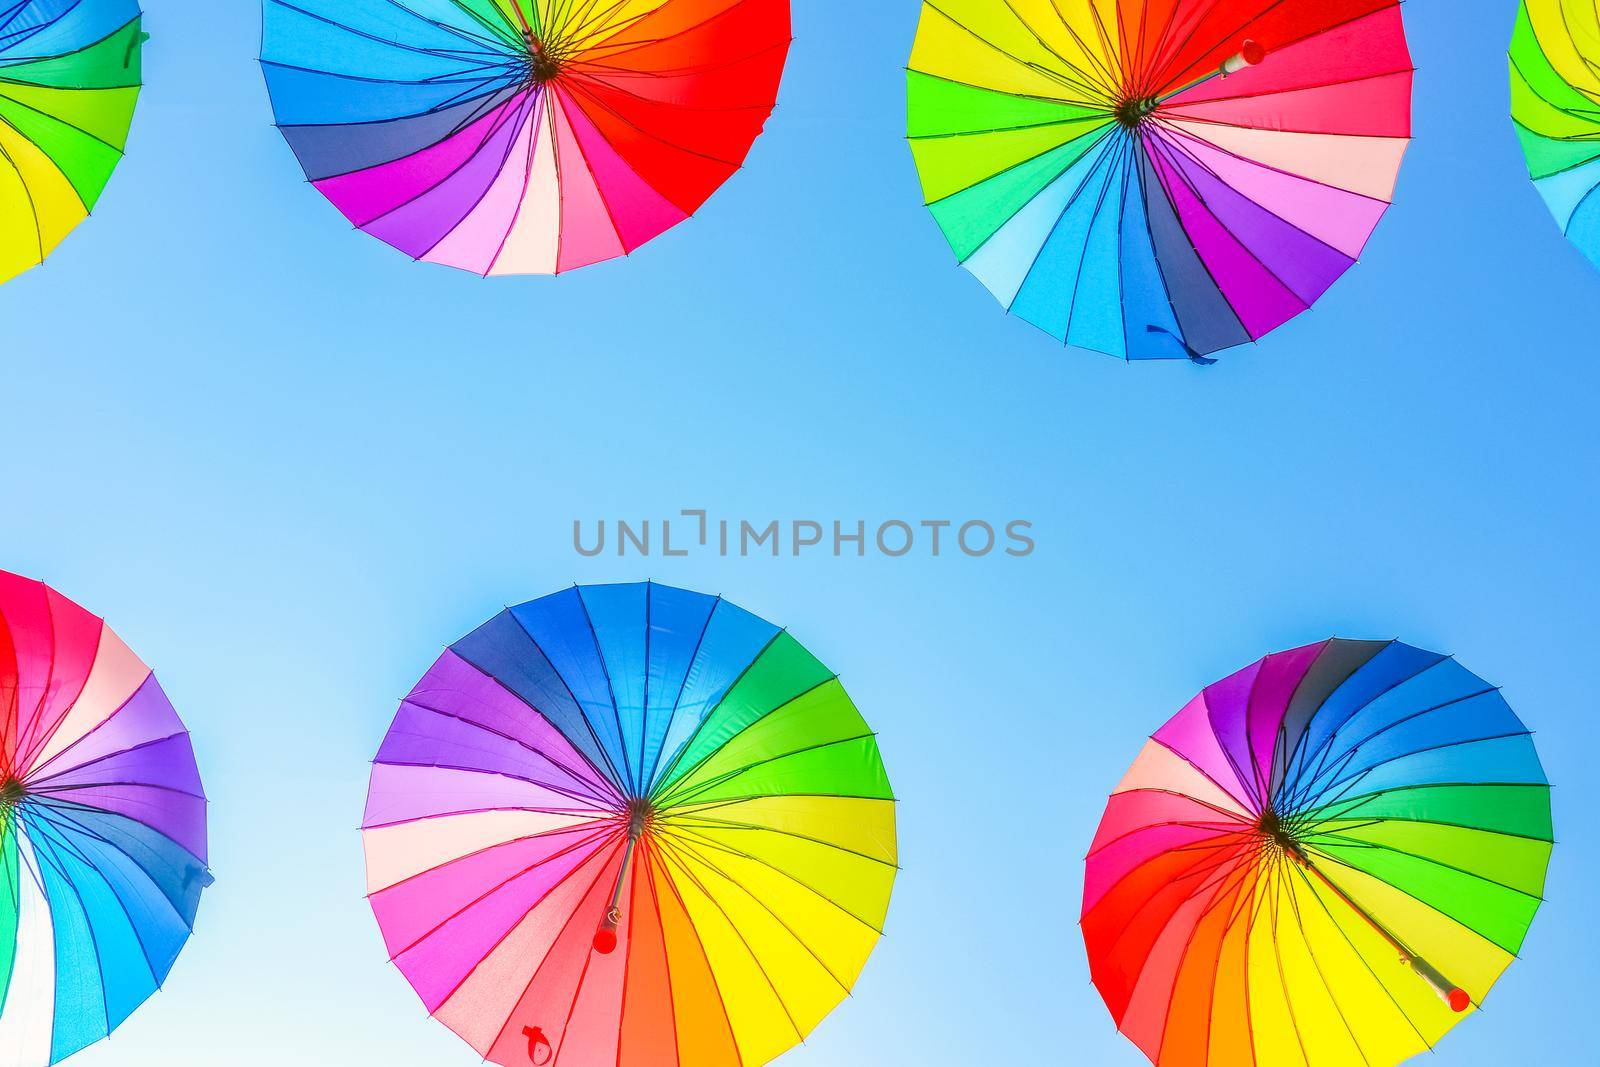 colorful umbrellas against the blue sky. High quality photo